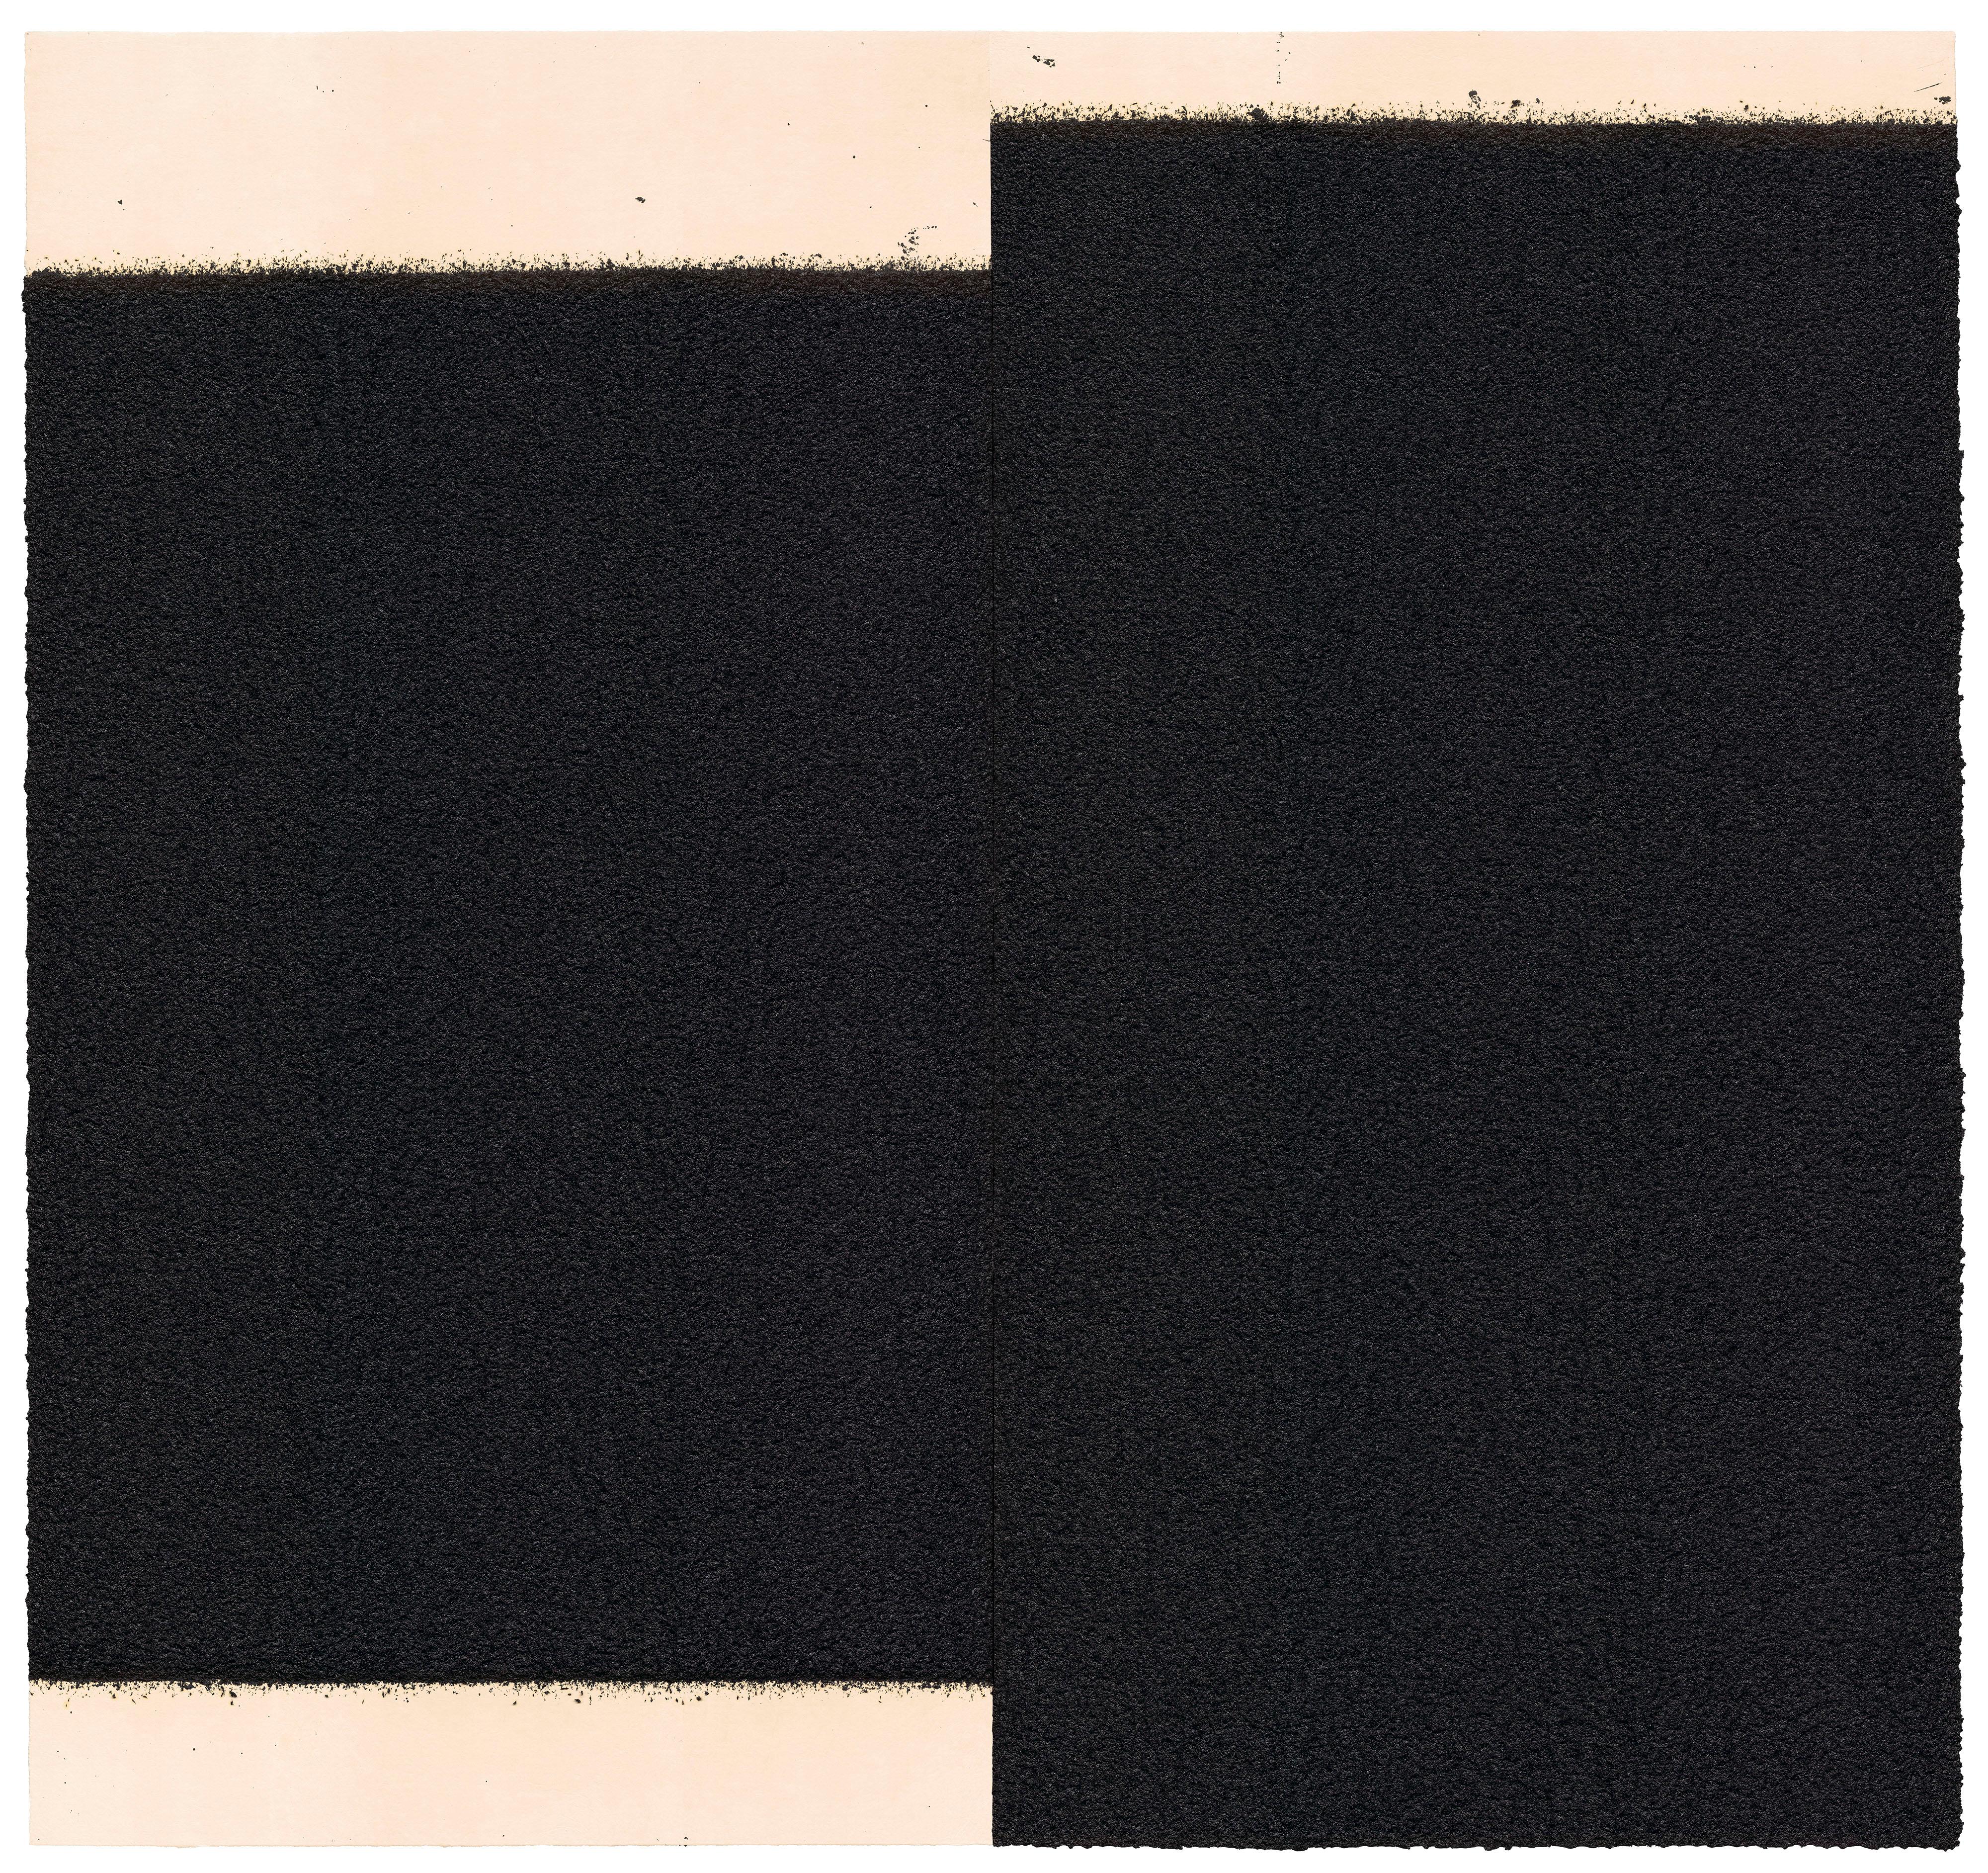 Backstop I - Print by Richard Serra